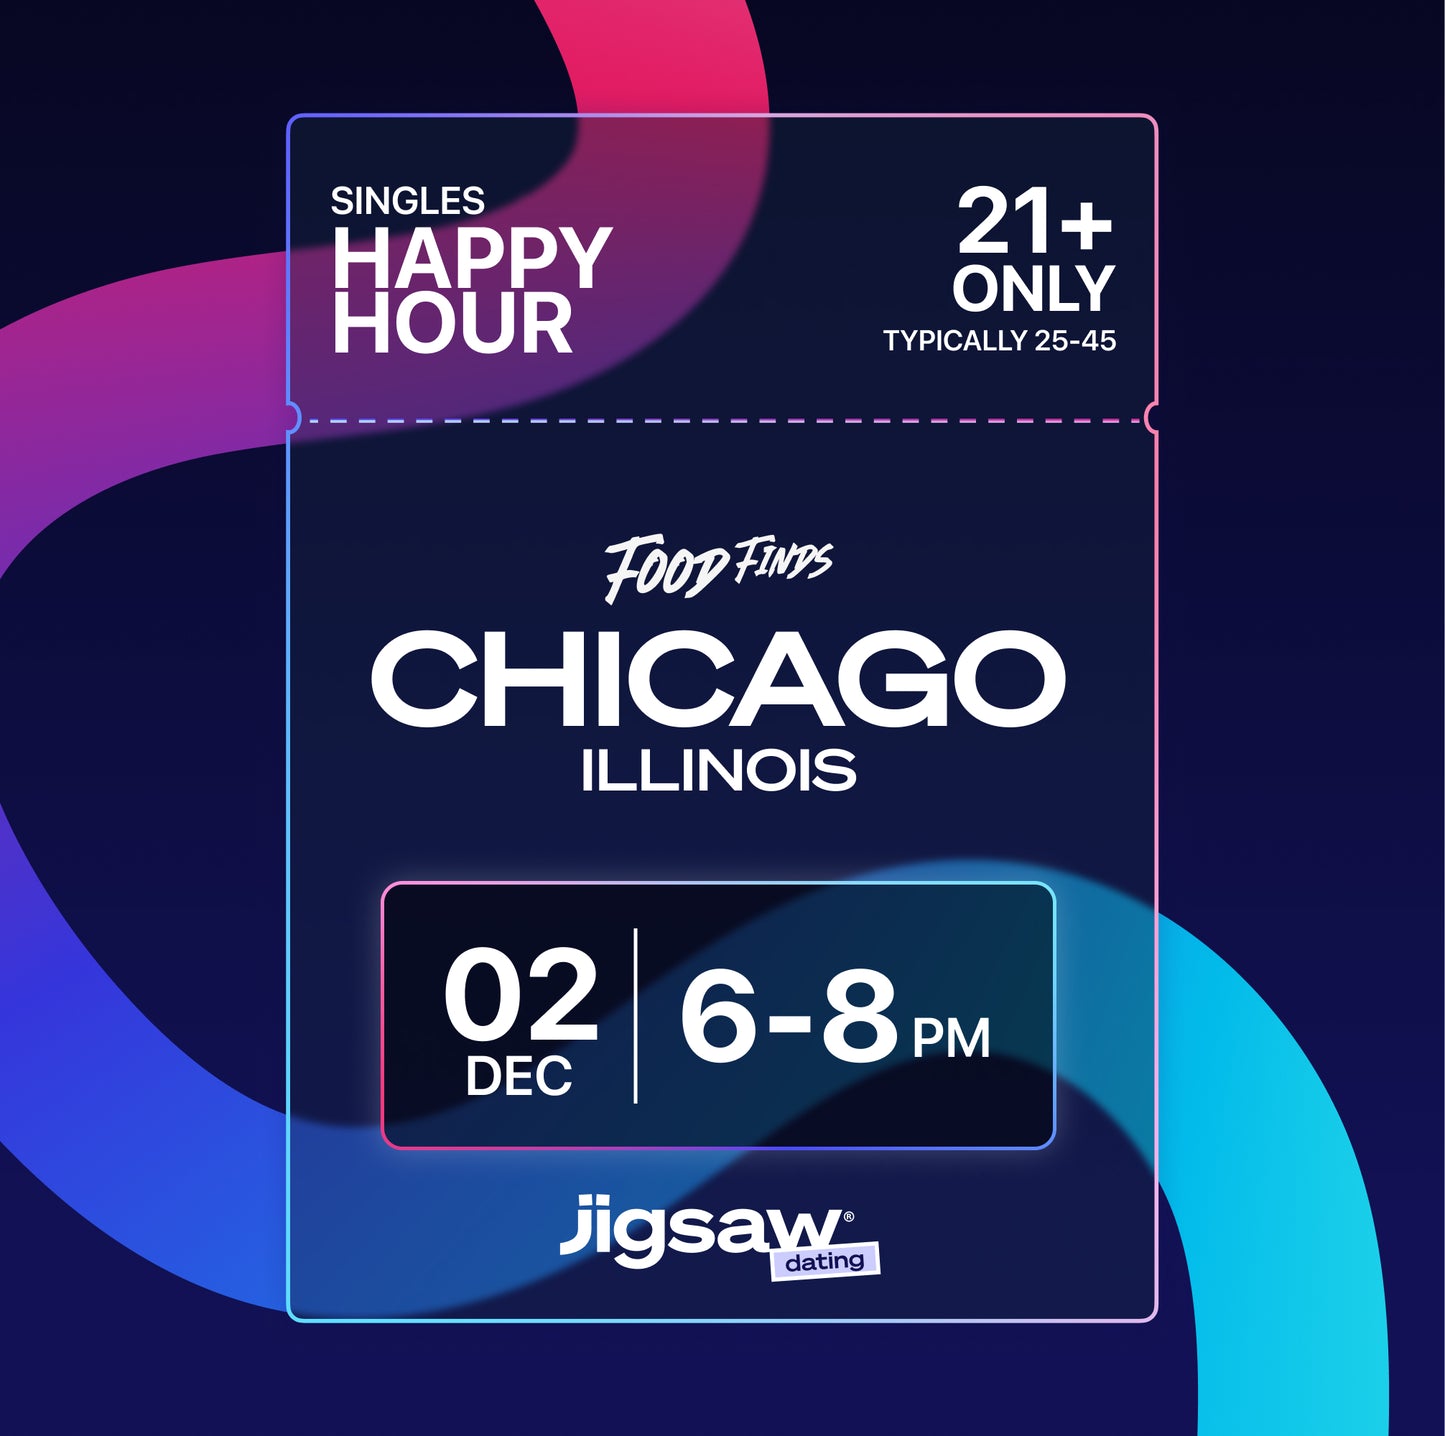 CHICAGO: Singles Happy Hour